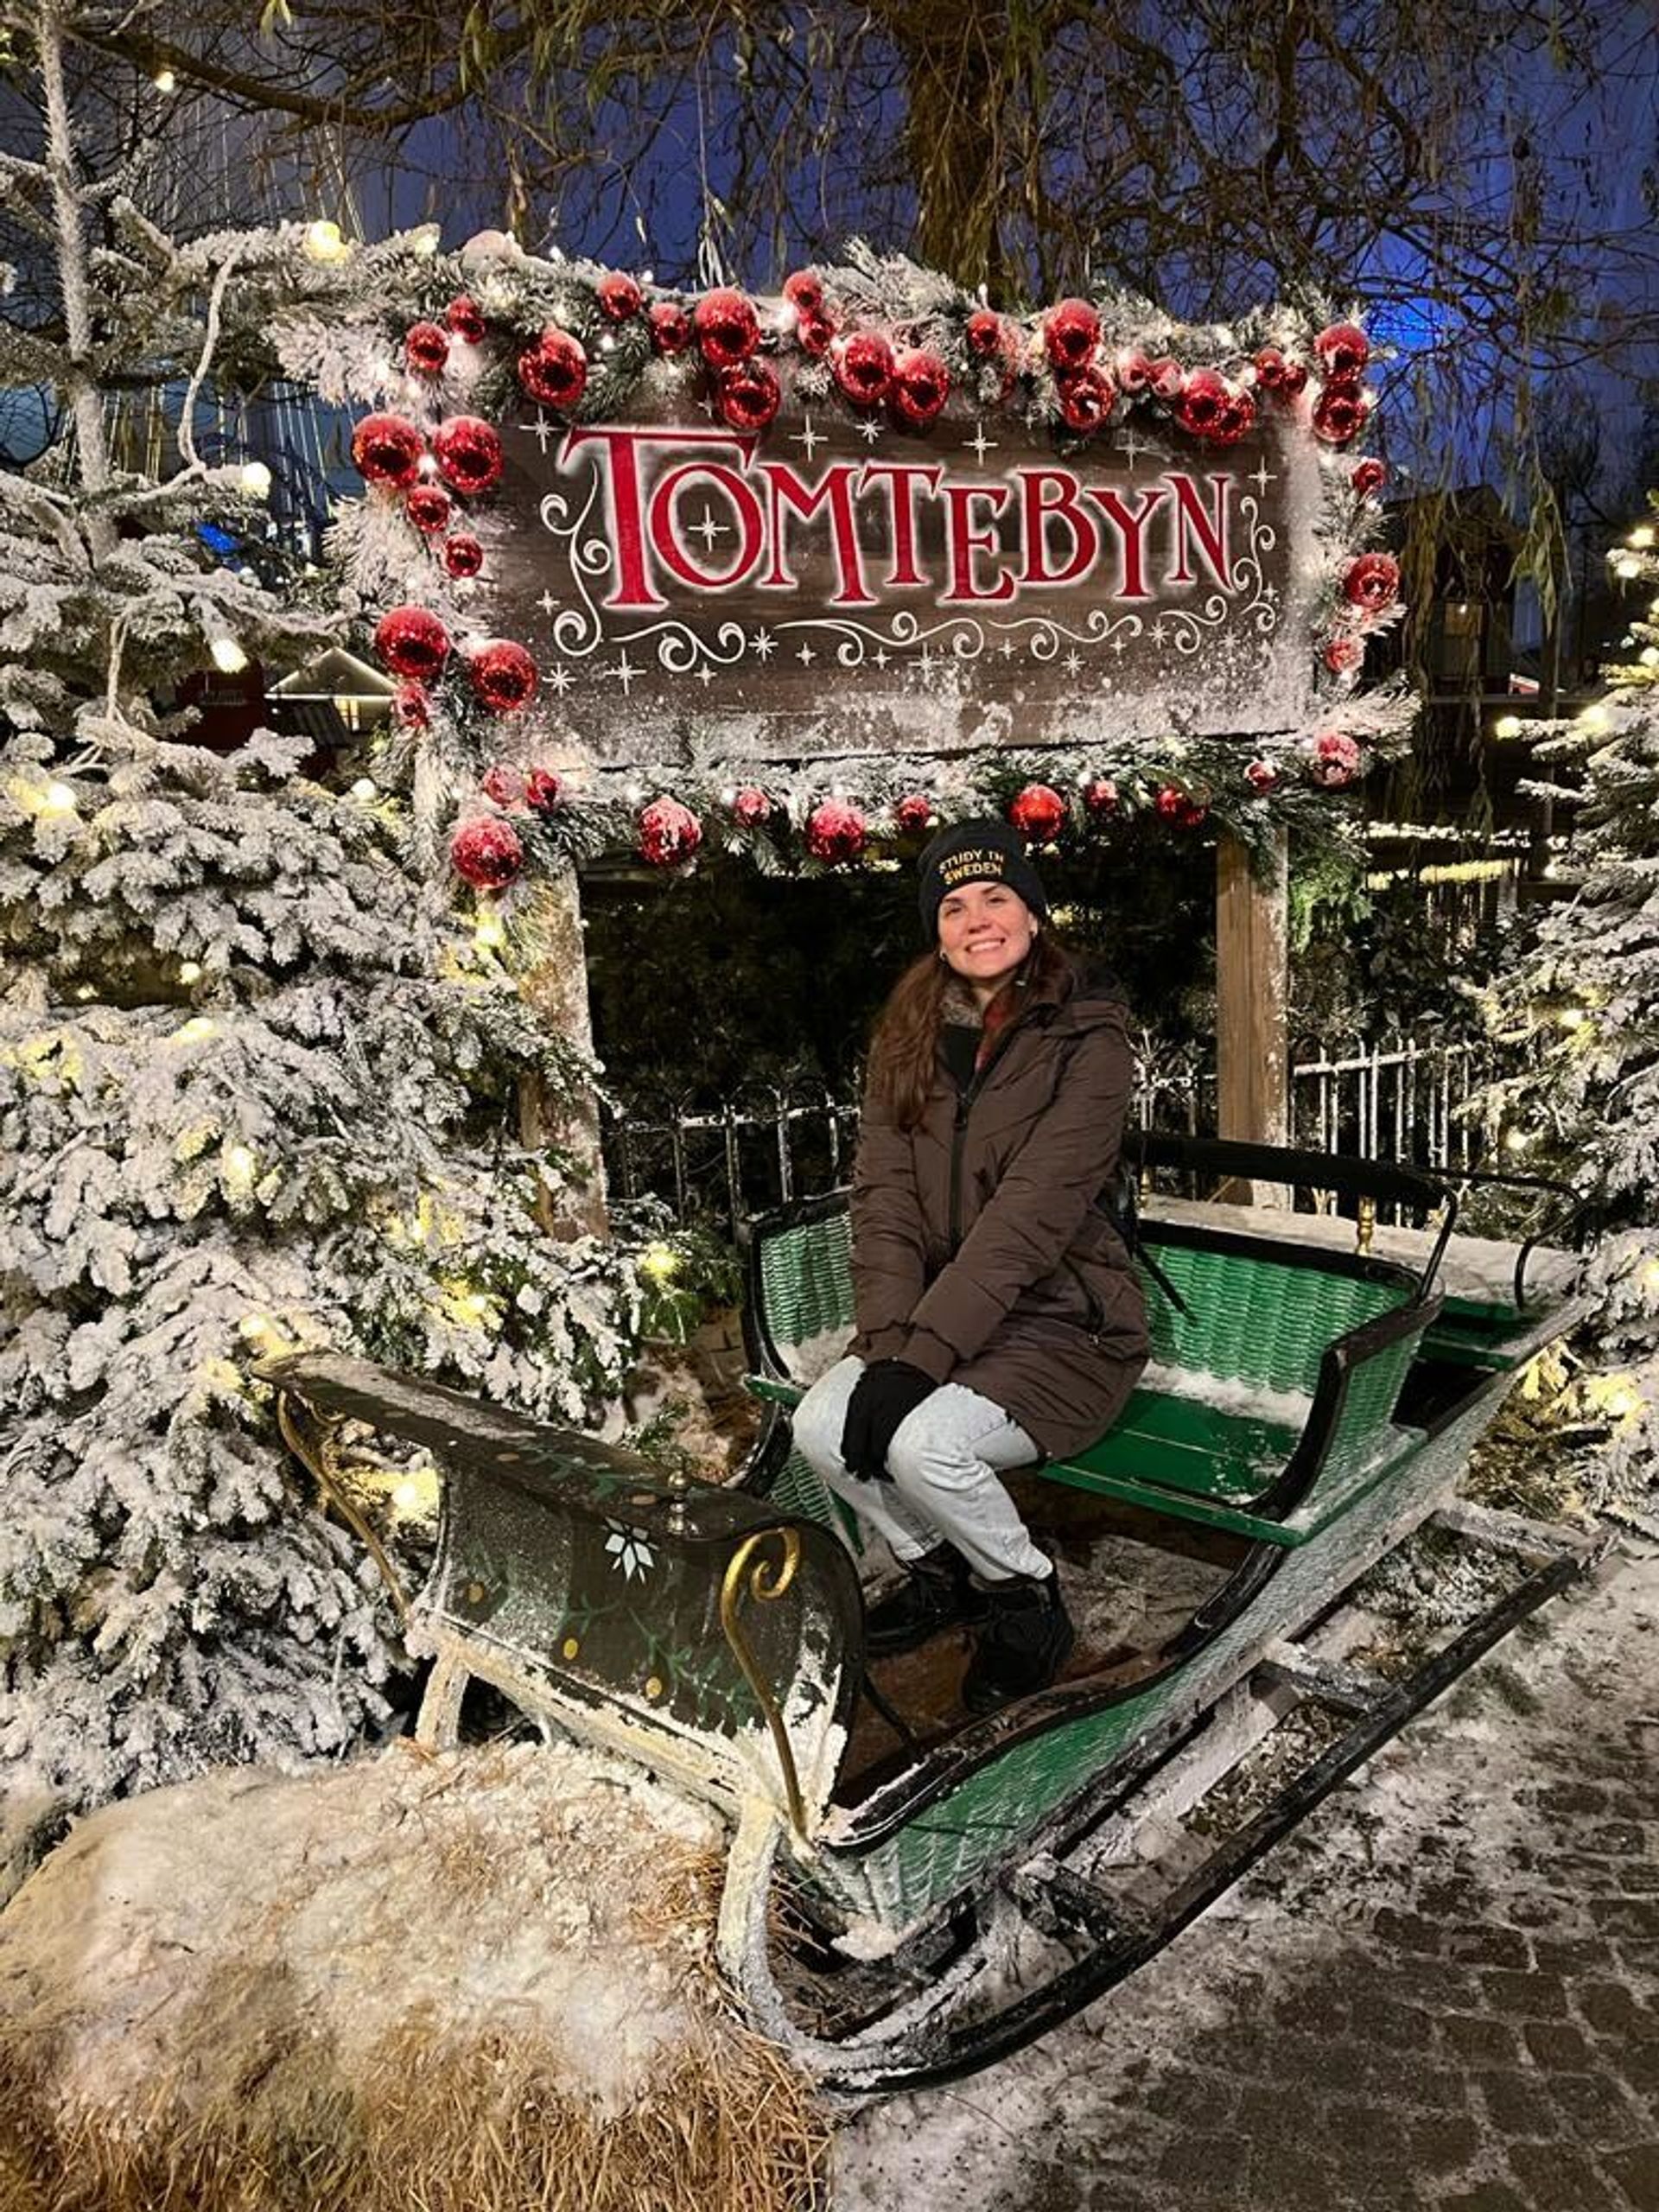 A girl sitting in a sleigh under Tomtebyn sign.